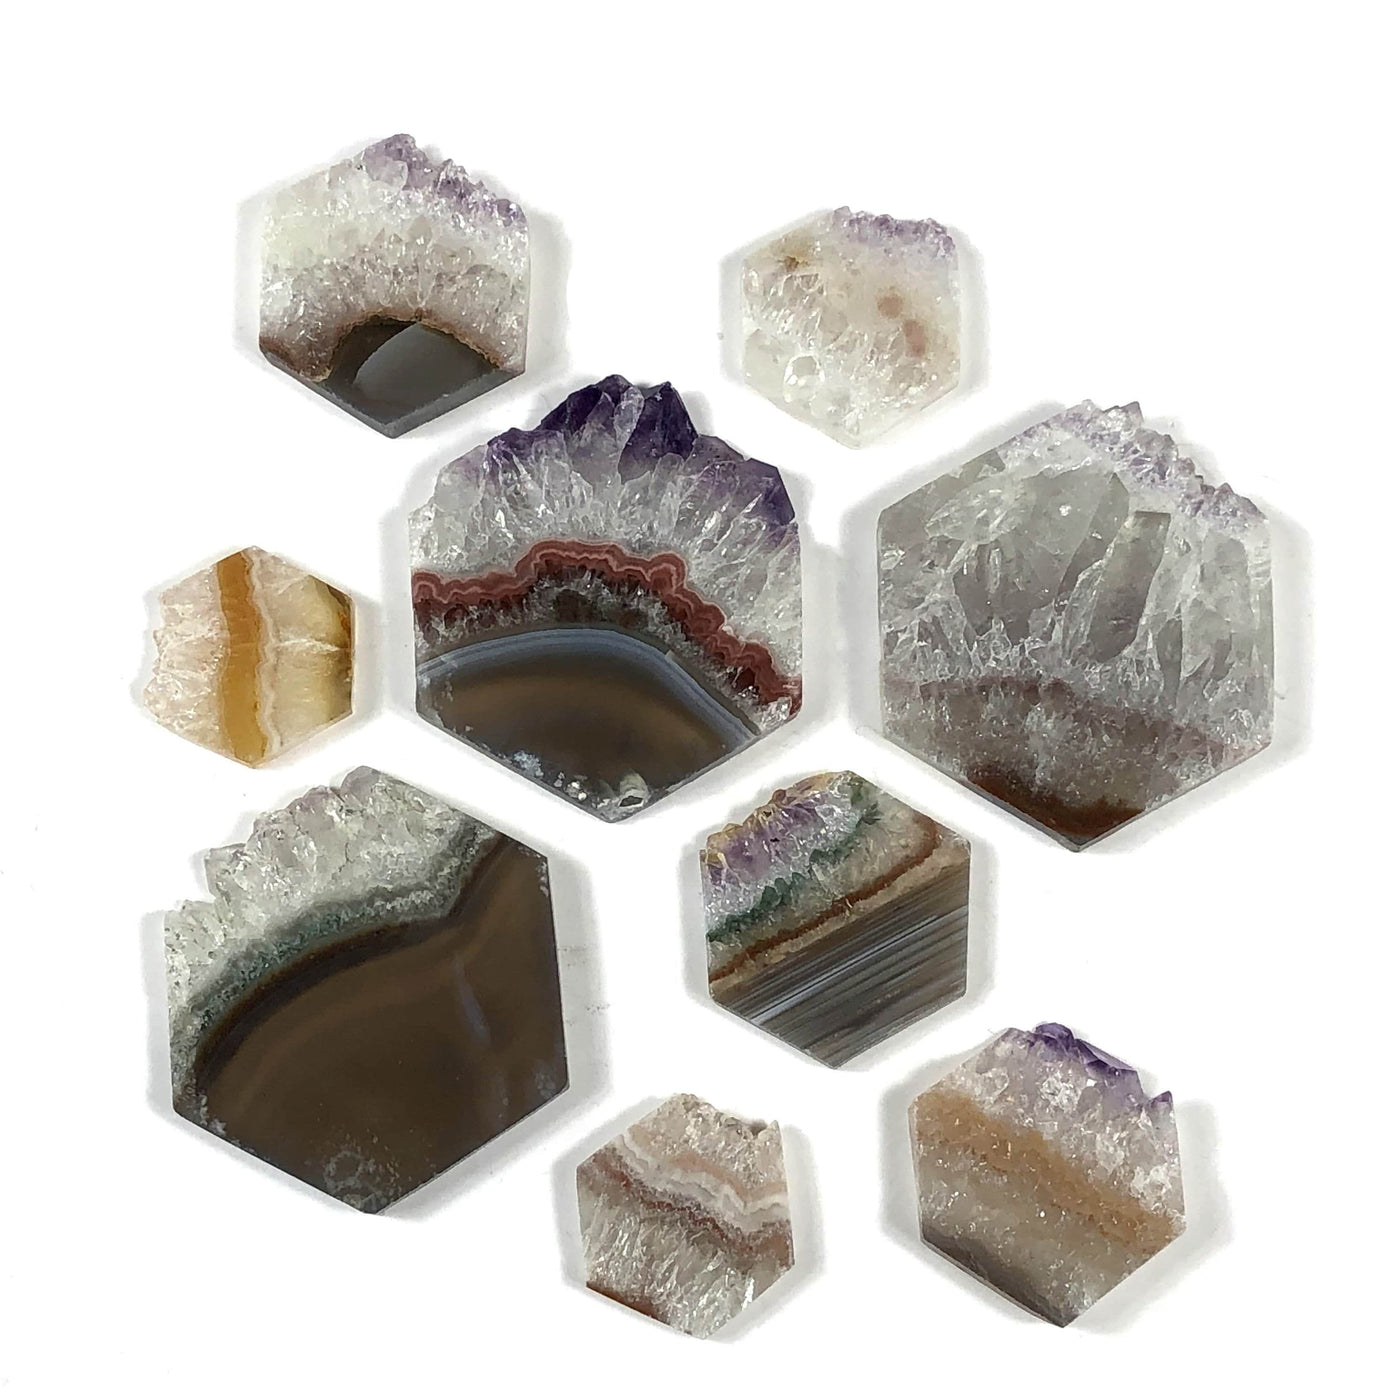 Hexagon Amethyst slice displayed in various sizes